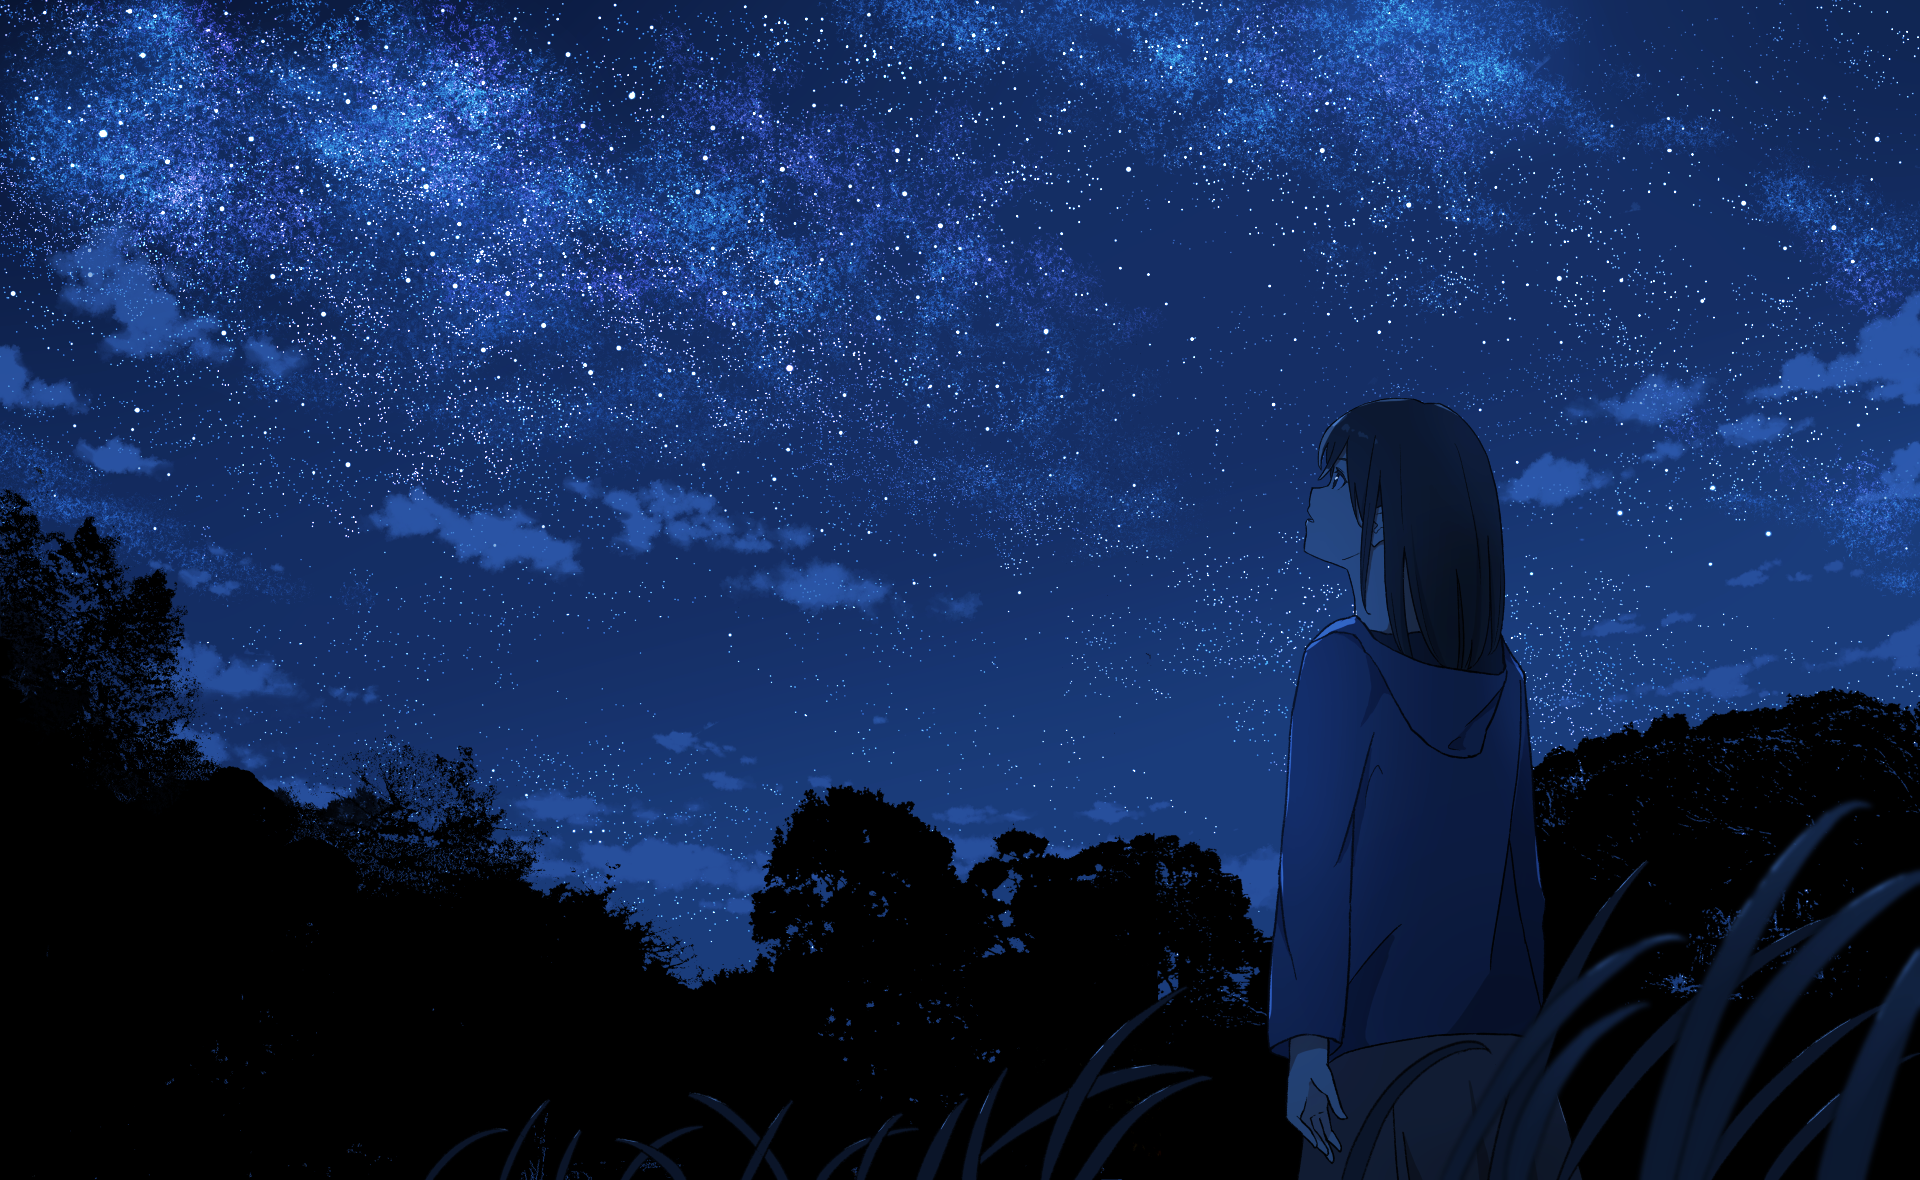 Looking up at a starry night sky by ããã